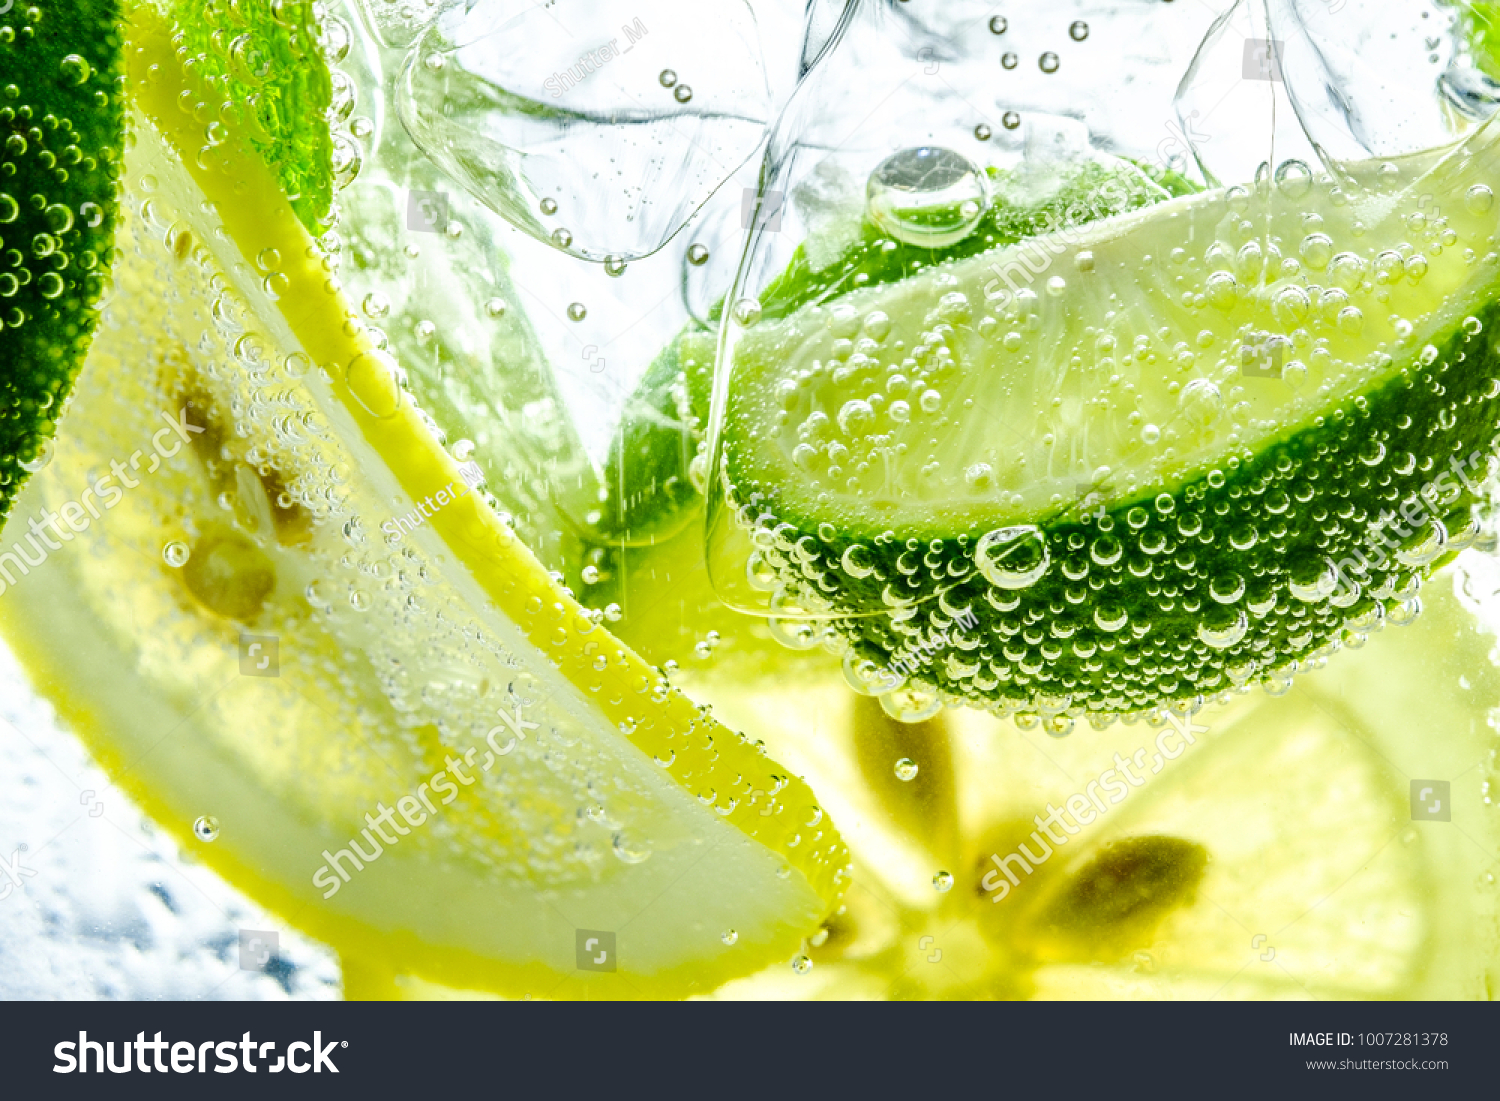 Lemon slice drop in fizzy sparkling water, juice refreshment #1007281378